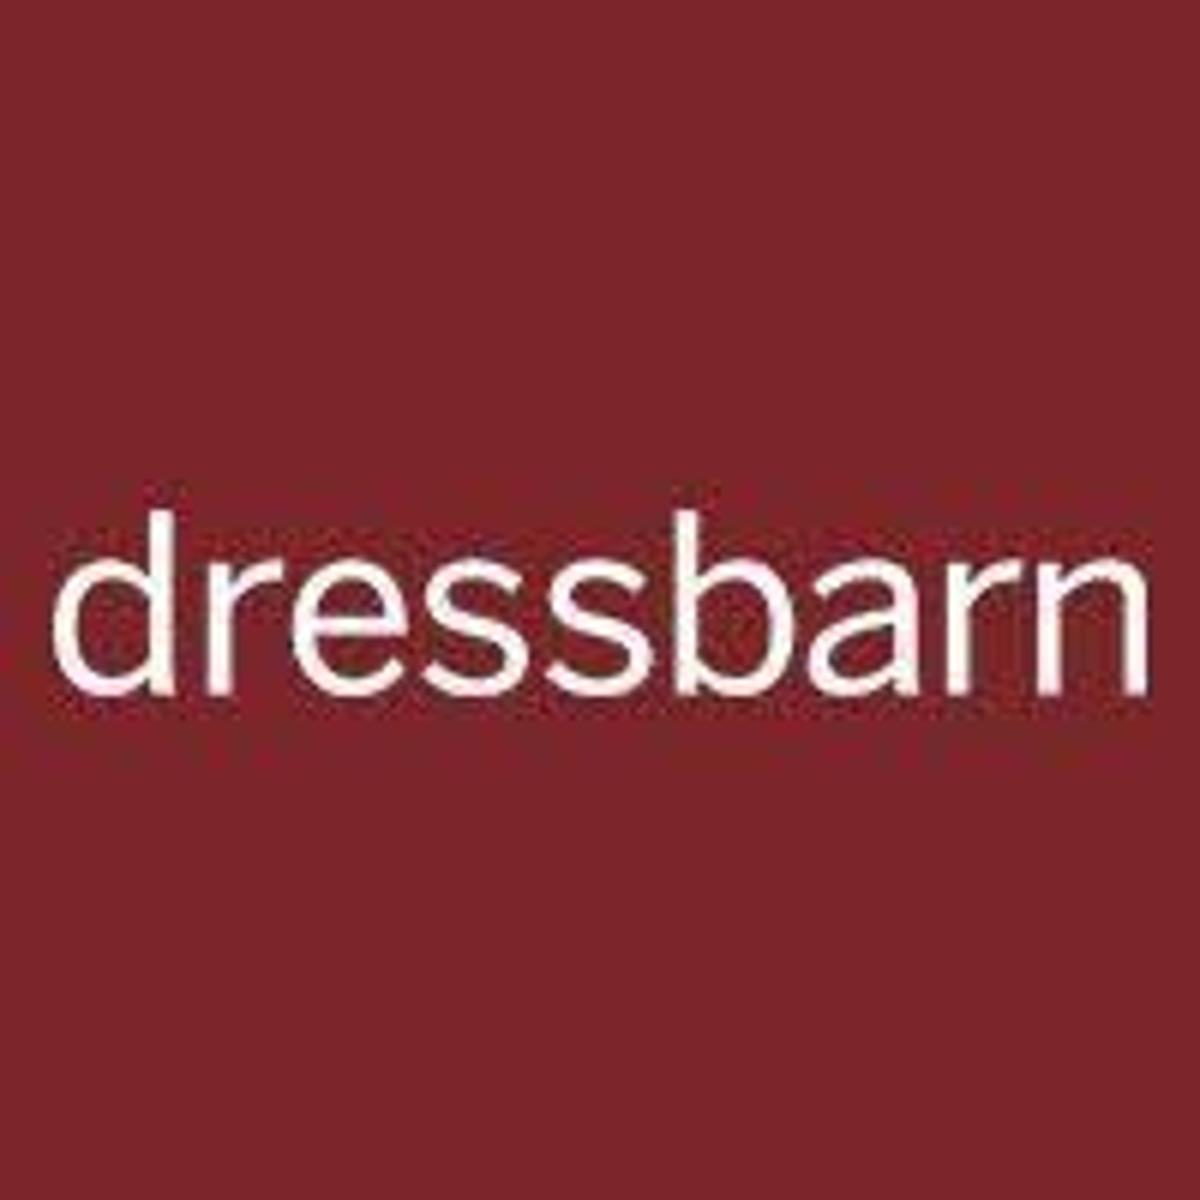 Dressbarn Logo - Dressbarn going out of business | Business | fredericksburg.com